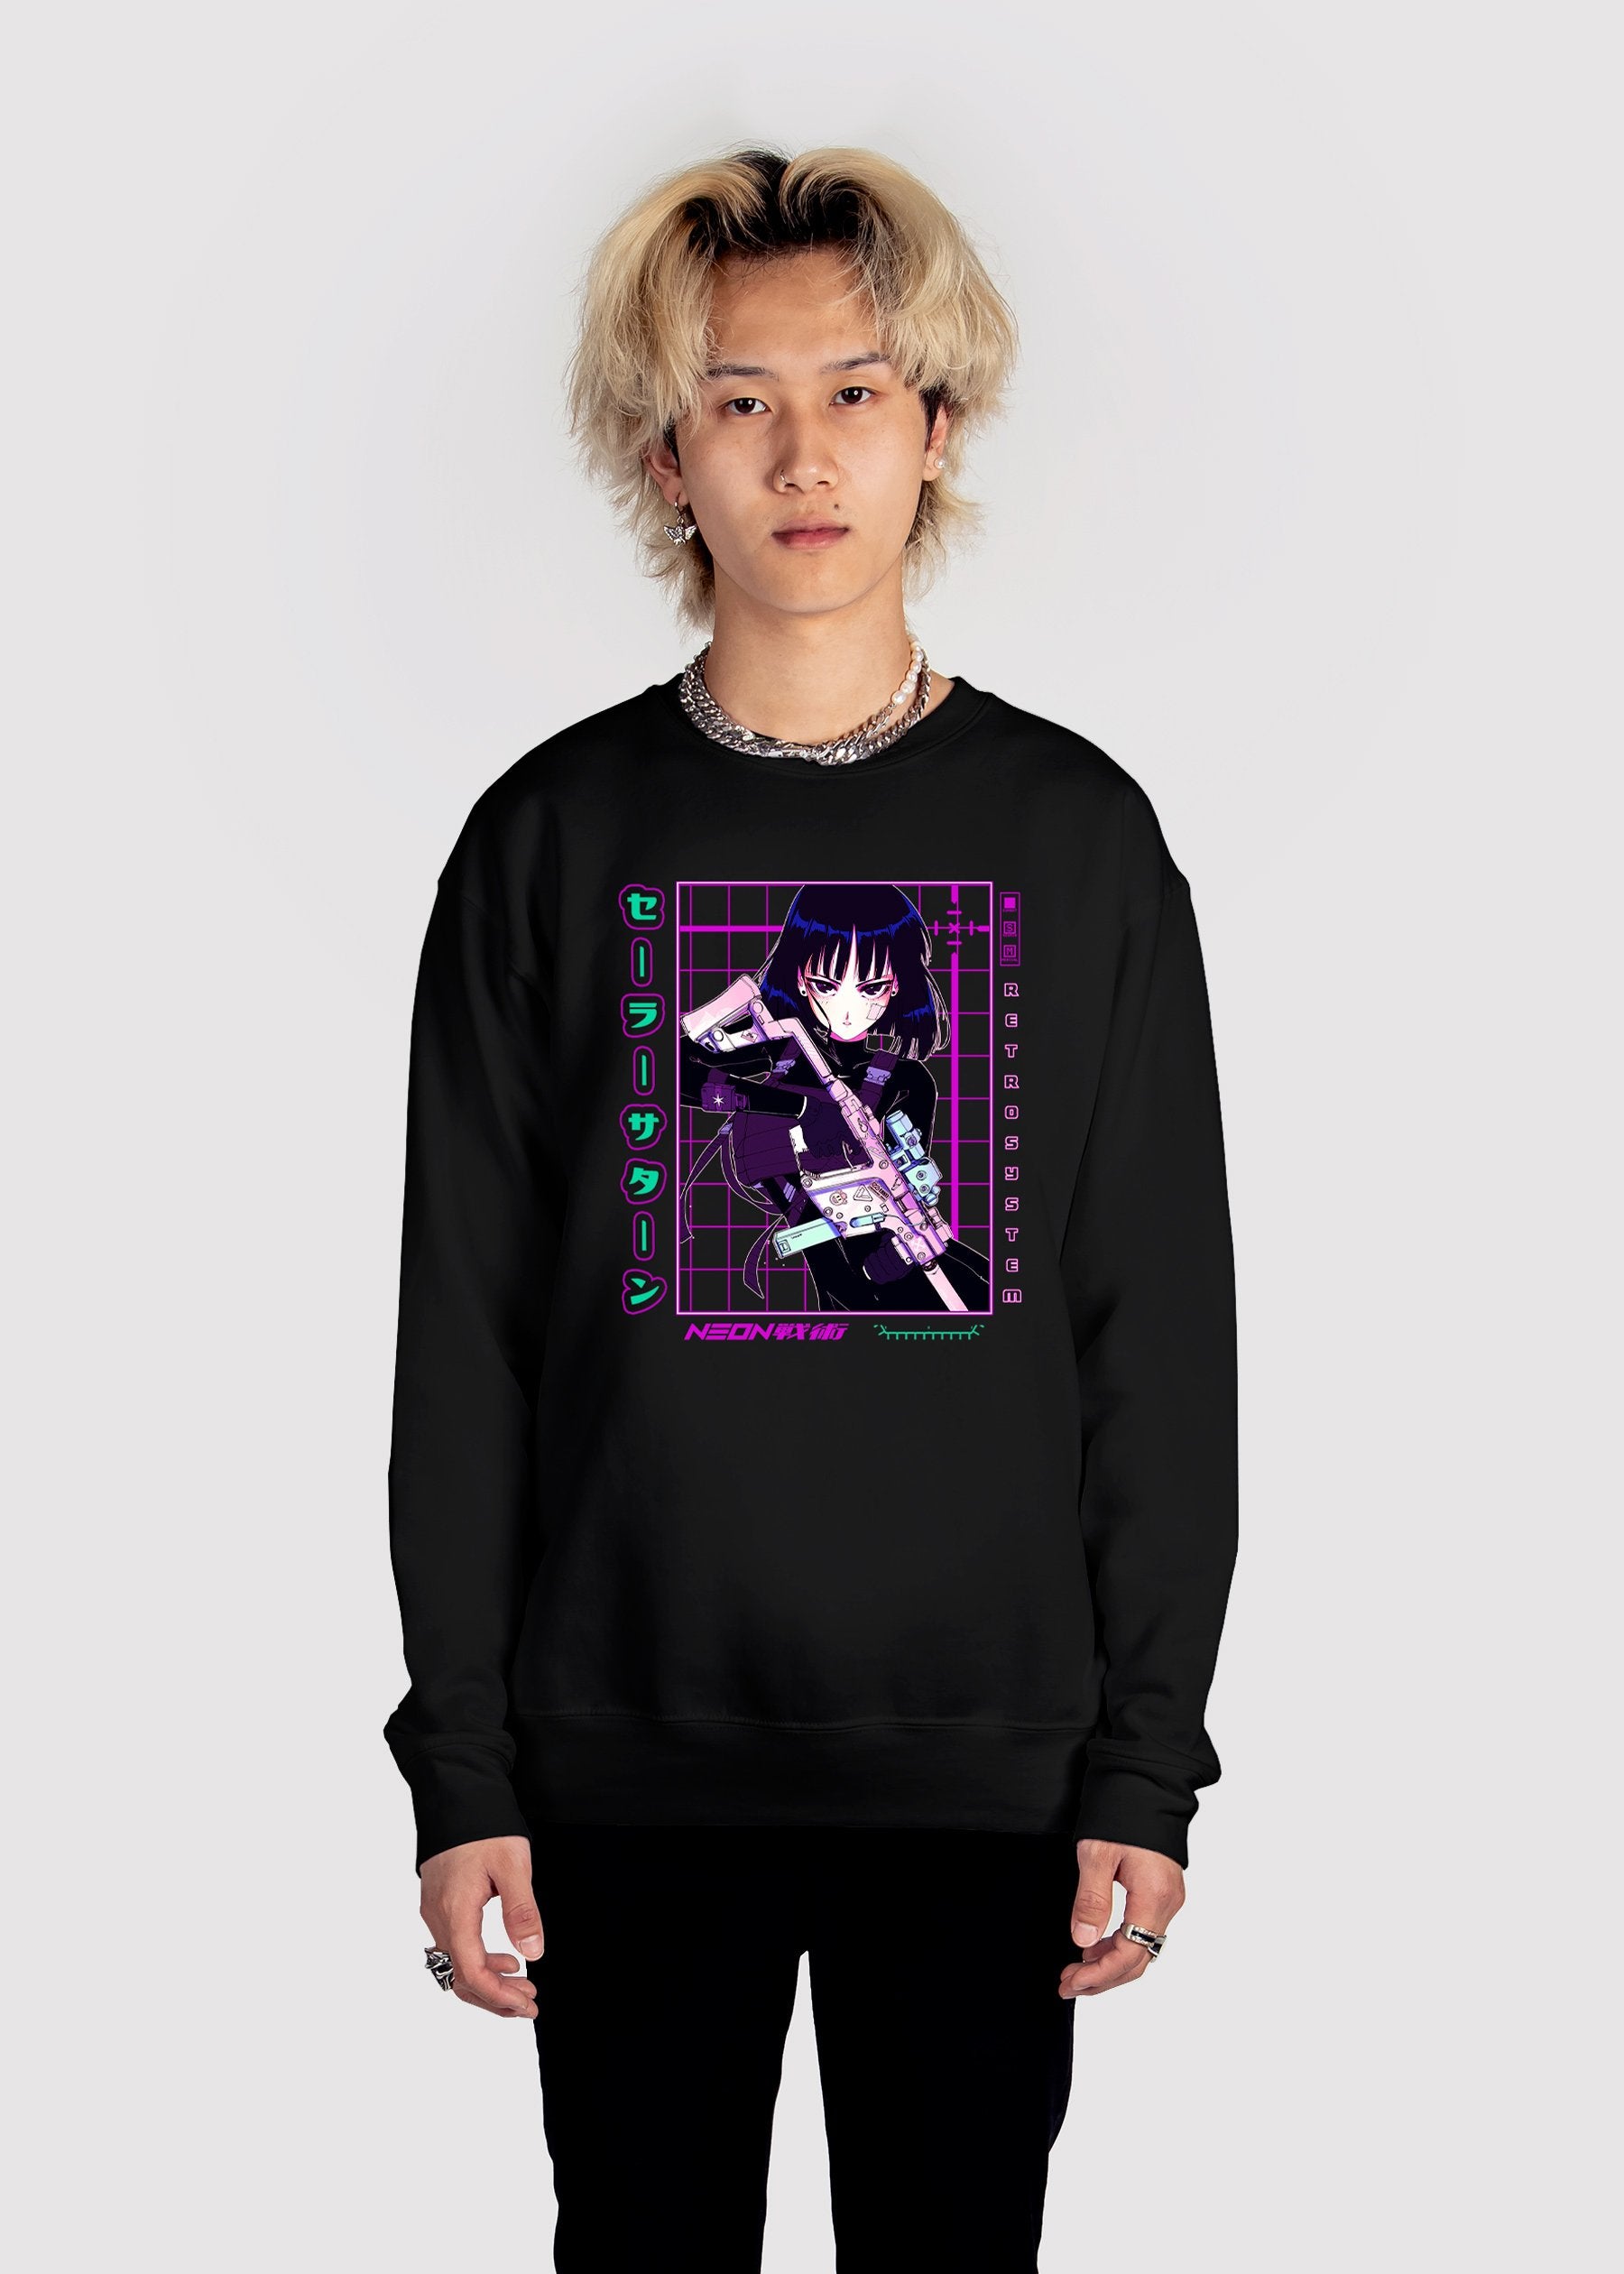 Sailor Saturn Sweatshirt Graphic Sweatshirt Vapor95 Purple Black S 